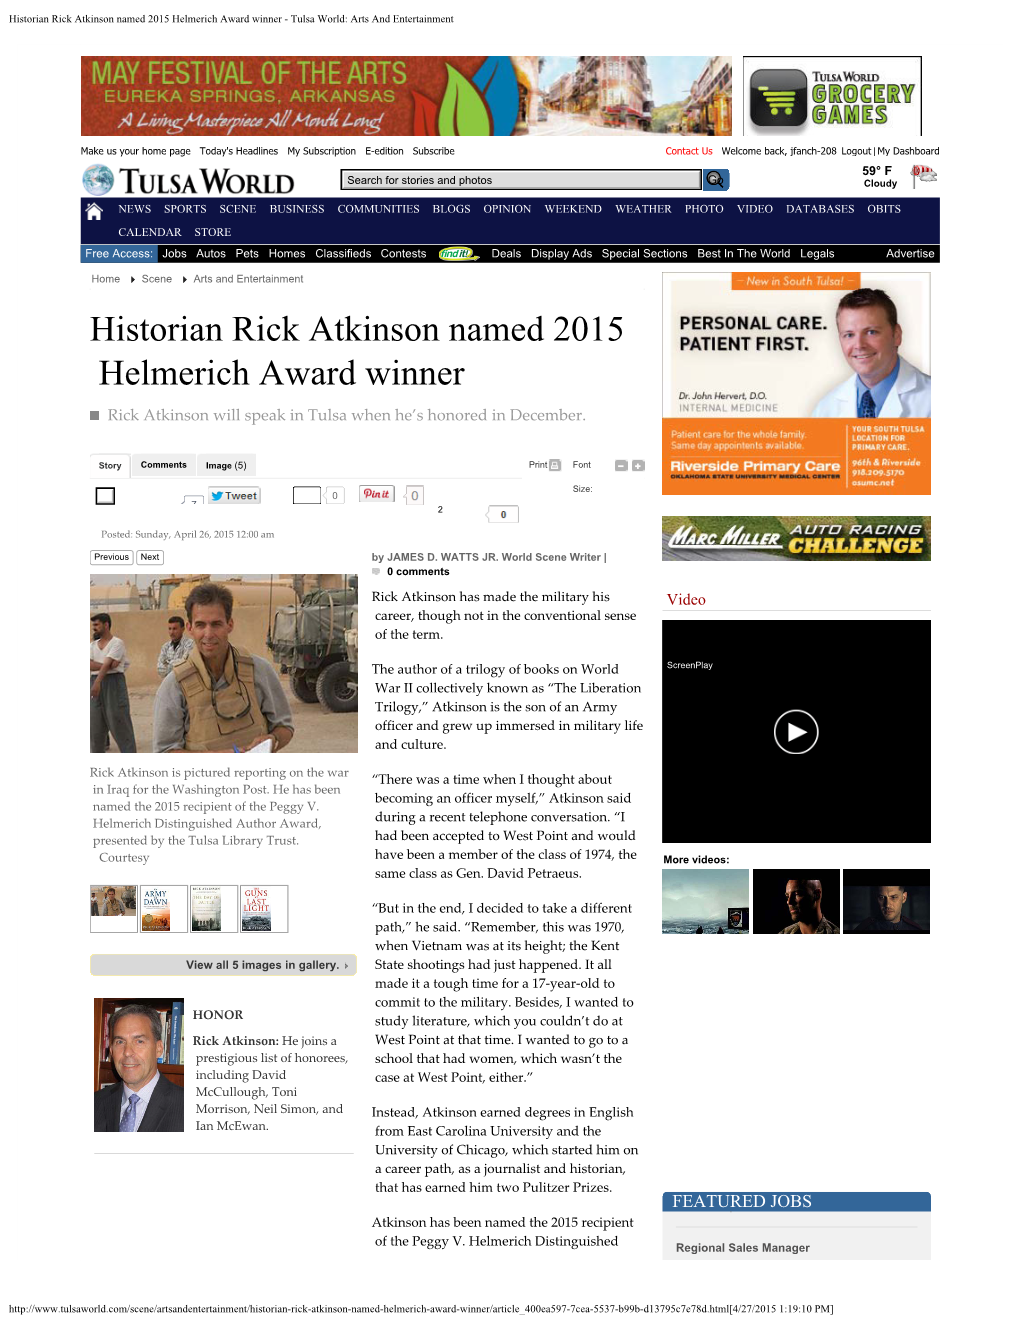 Historian Rick Atkinson Named 2015 Helmerich Award Winner - Tulsa World: Arts and Entertainment